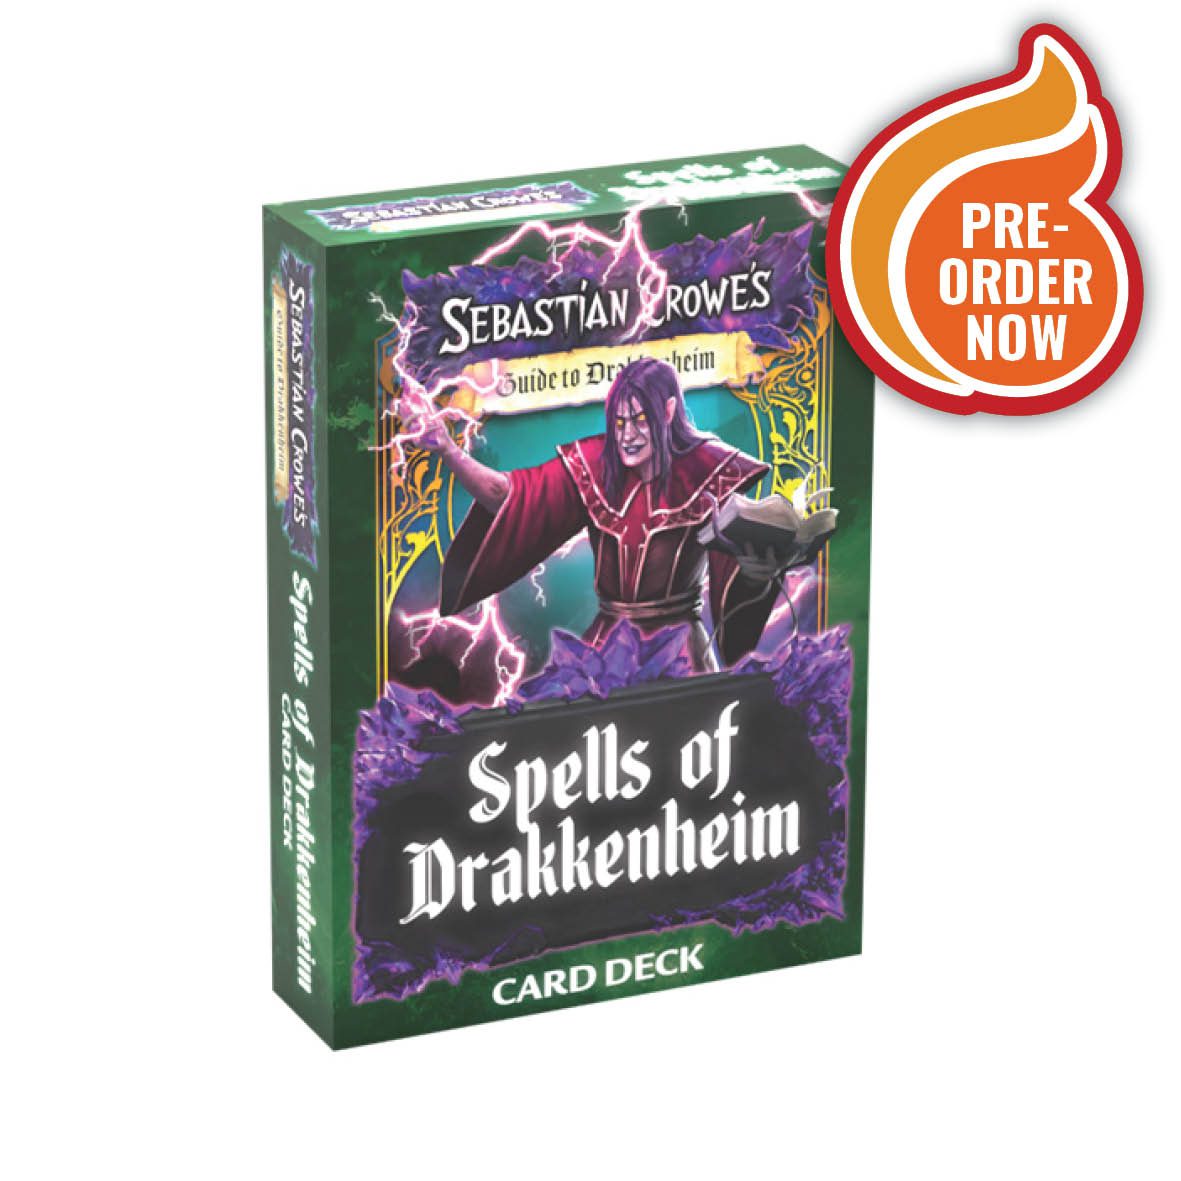 Sebastian Crowe’s Guide to Drakkenheim: Spells of Drakkenheim Deck